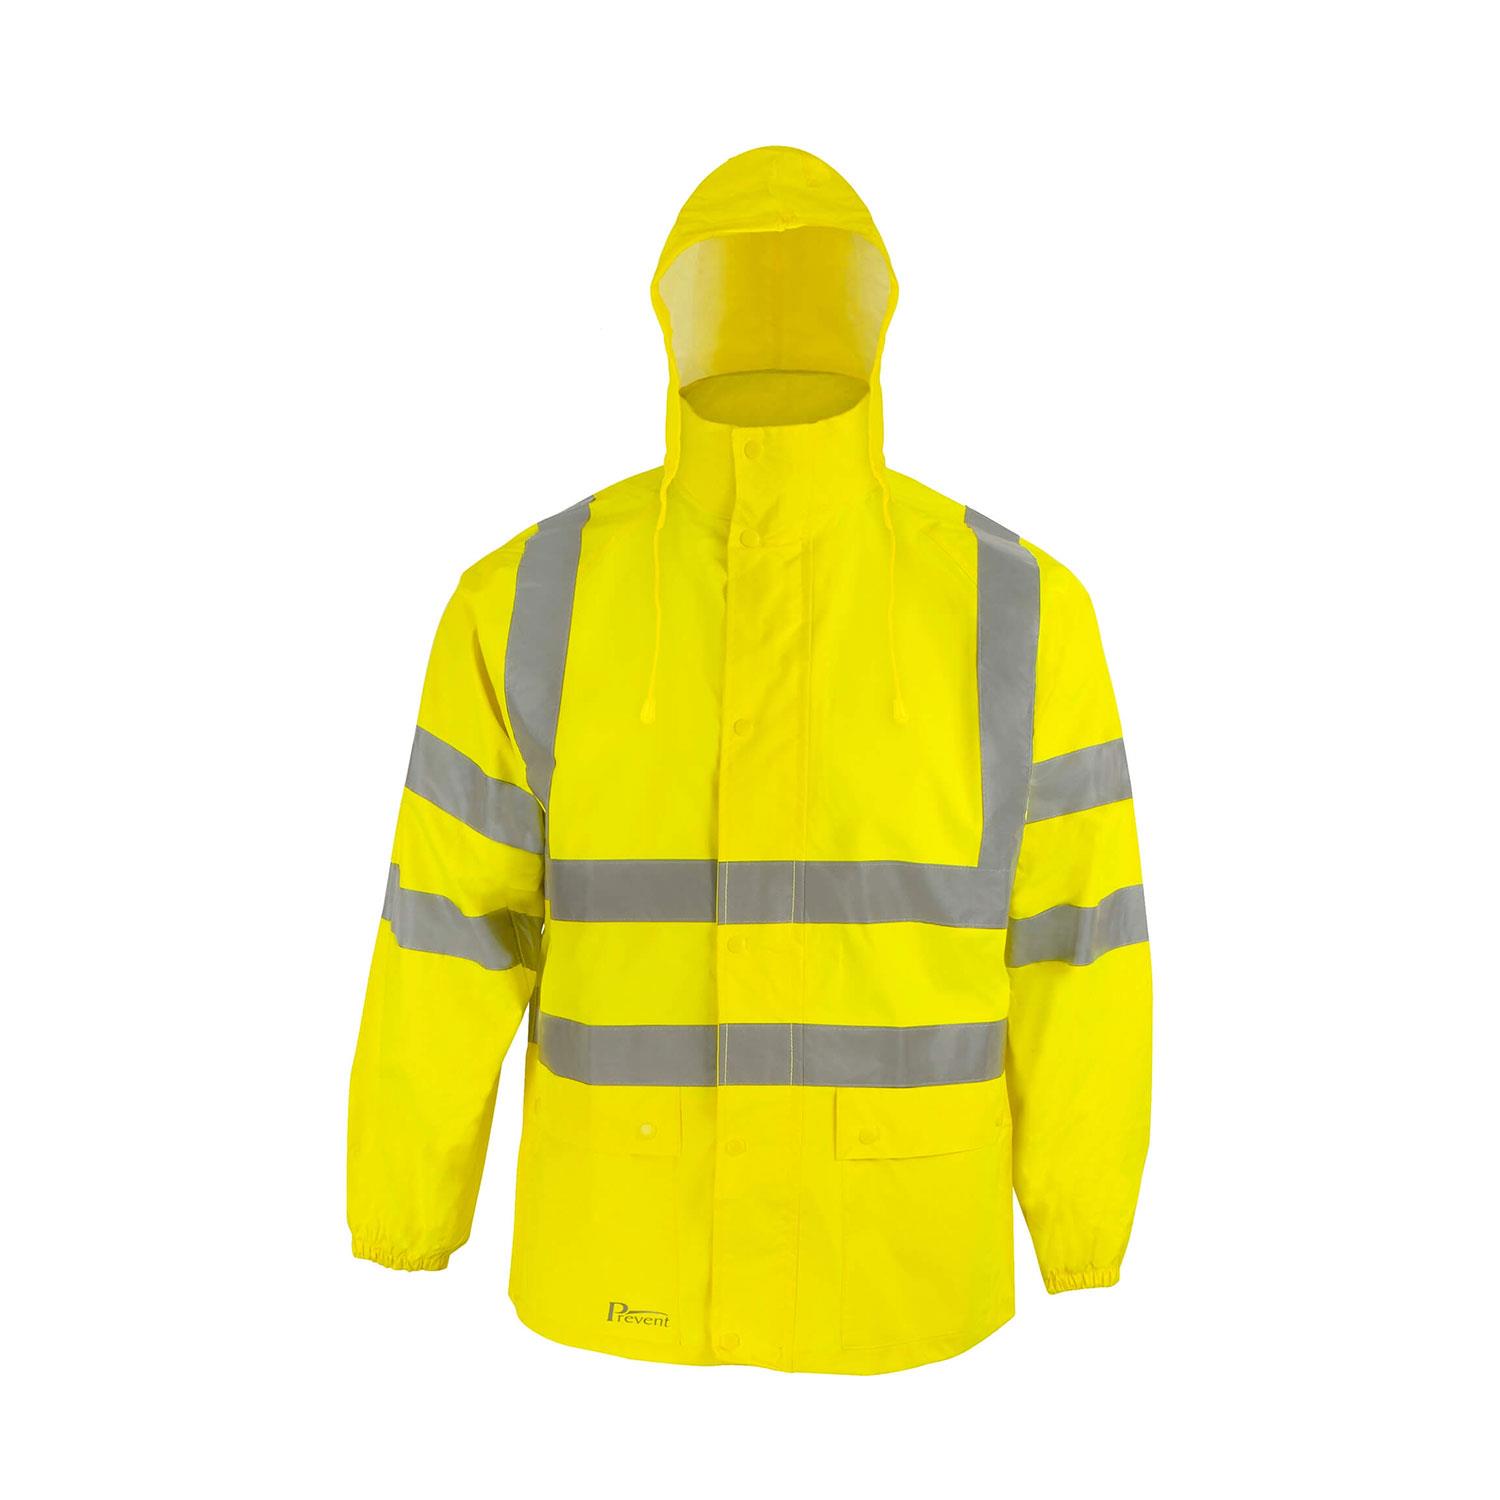 PREVENT® Warnschutz-Regenbekleidung RJG, gelb, Gr. 3XL